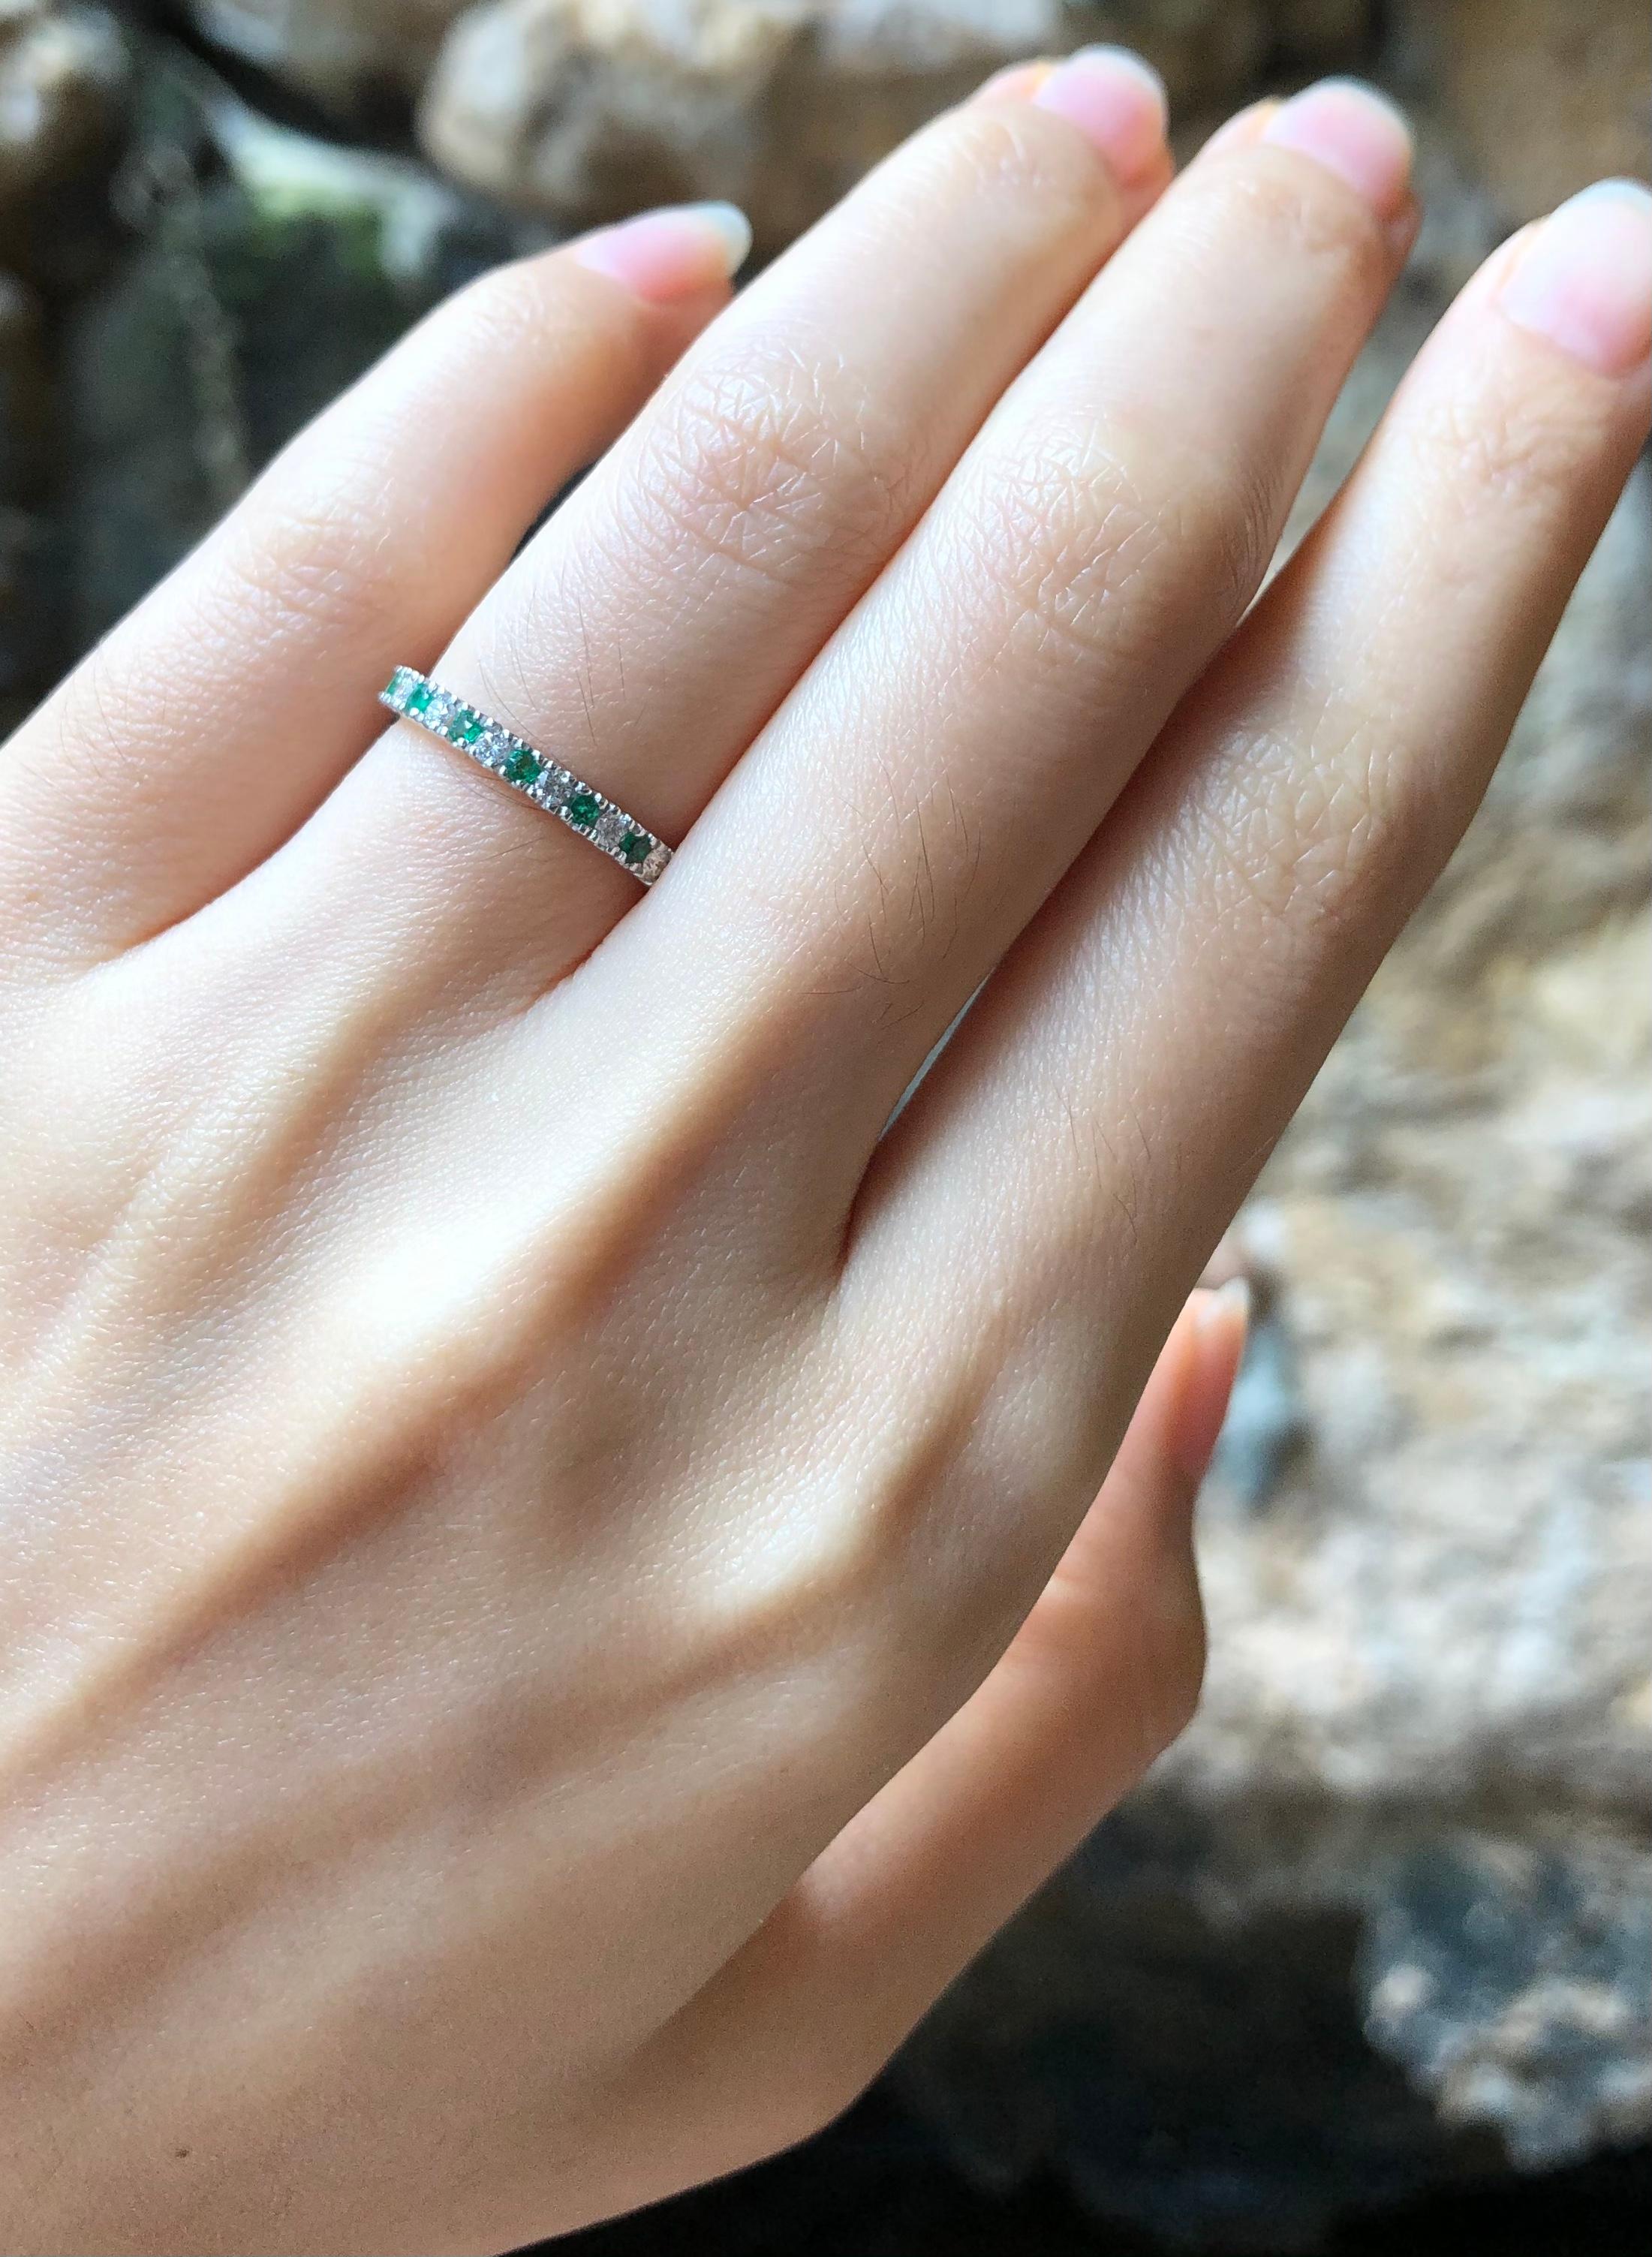 Emerald 0.15 carat with Diamond 0.16  carat Ring set in 18 Karat White Gold Settings

Width:  3.0 cm 
Length: 0.2 cm
Ring Size: 48
Total Weight: 1.97 grams

